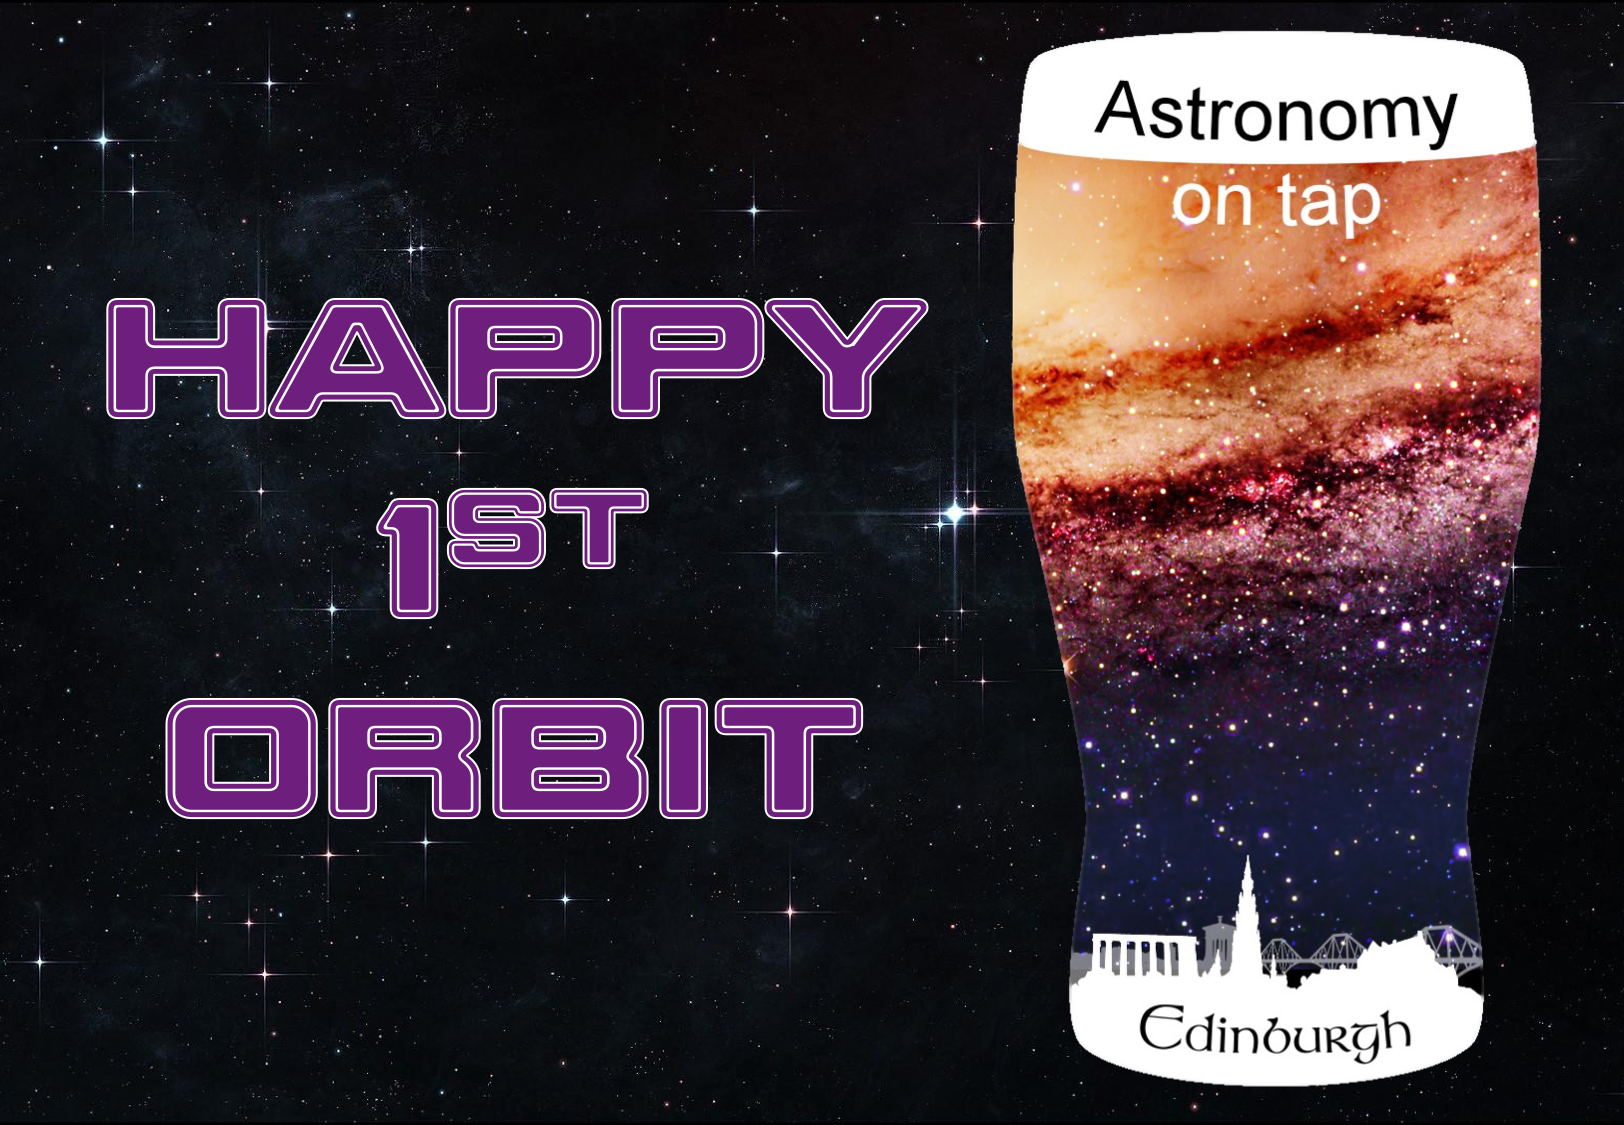 The AoT EDI logo with the words "Happy 1st orbit"